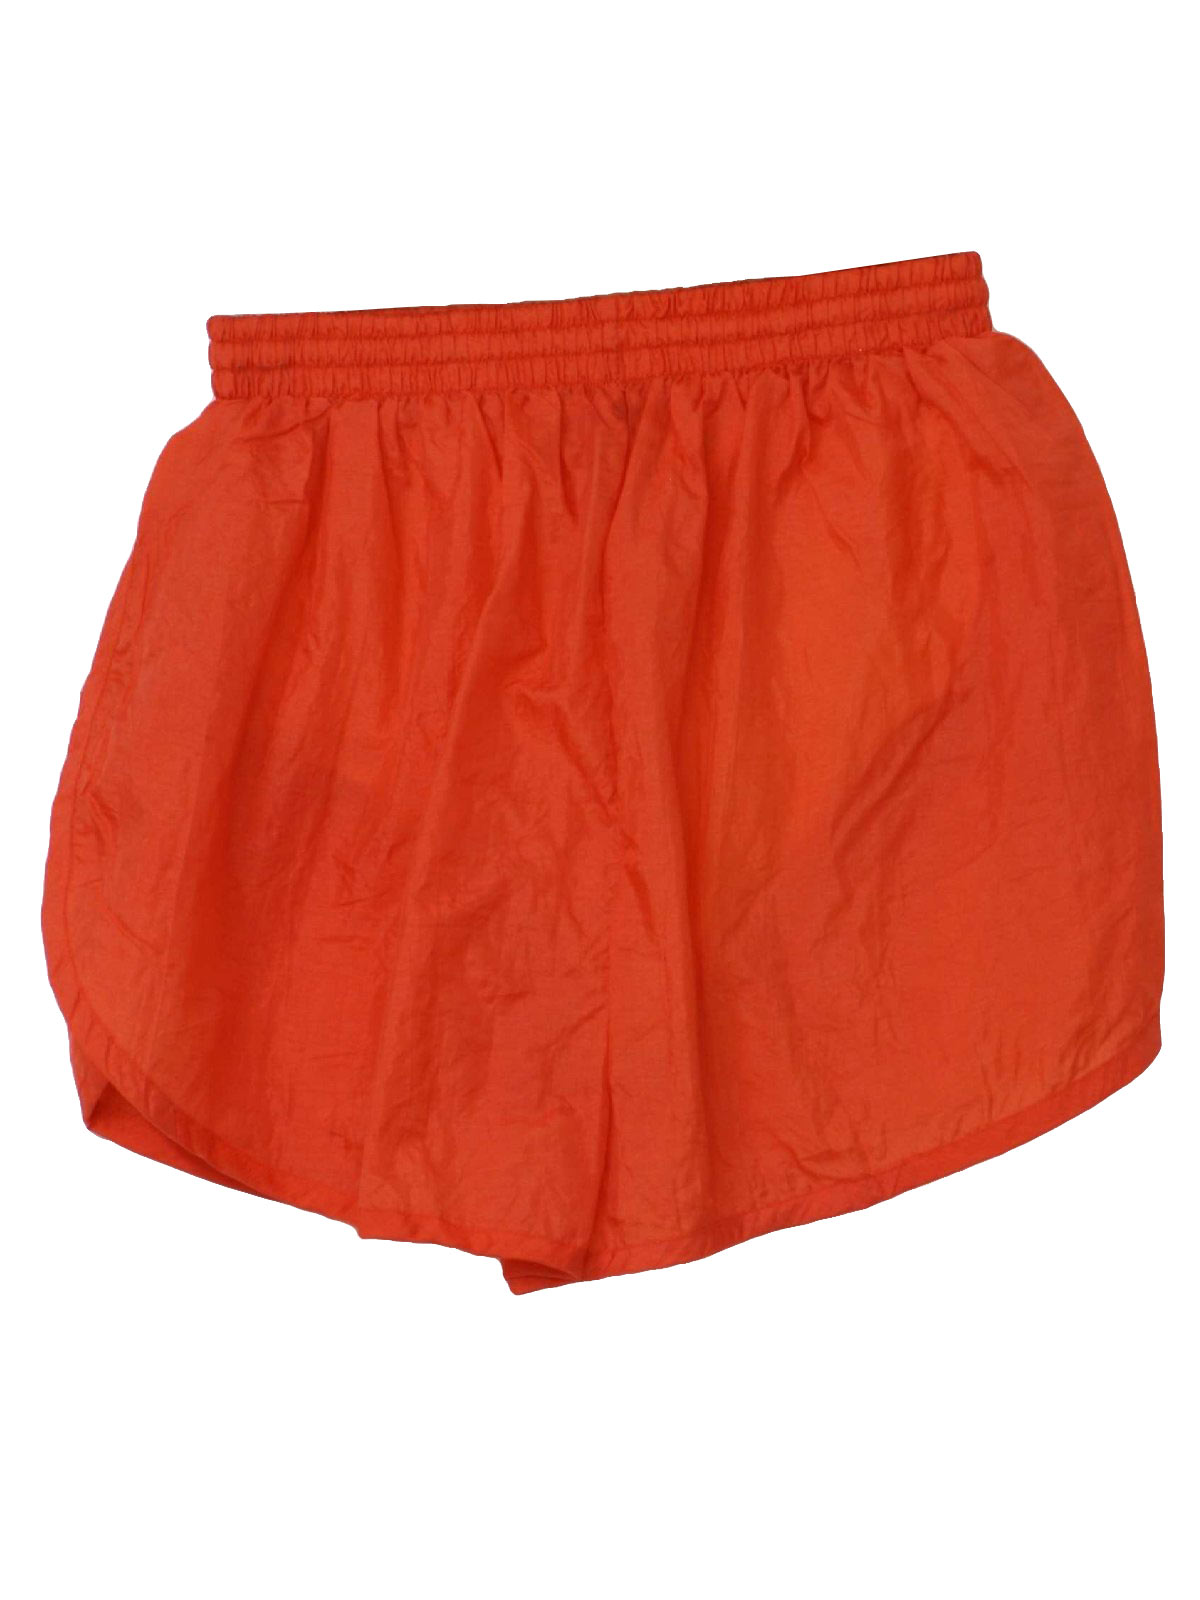 Retro 1980's Shorts (Aero) : 80s -Aero- Mens caution orange nylon high ...